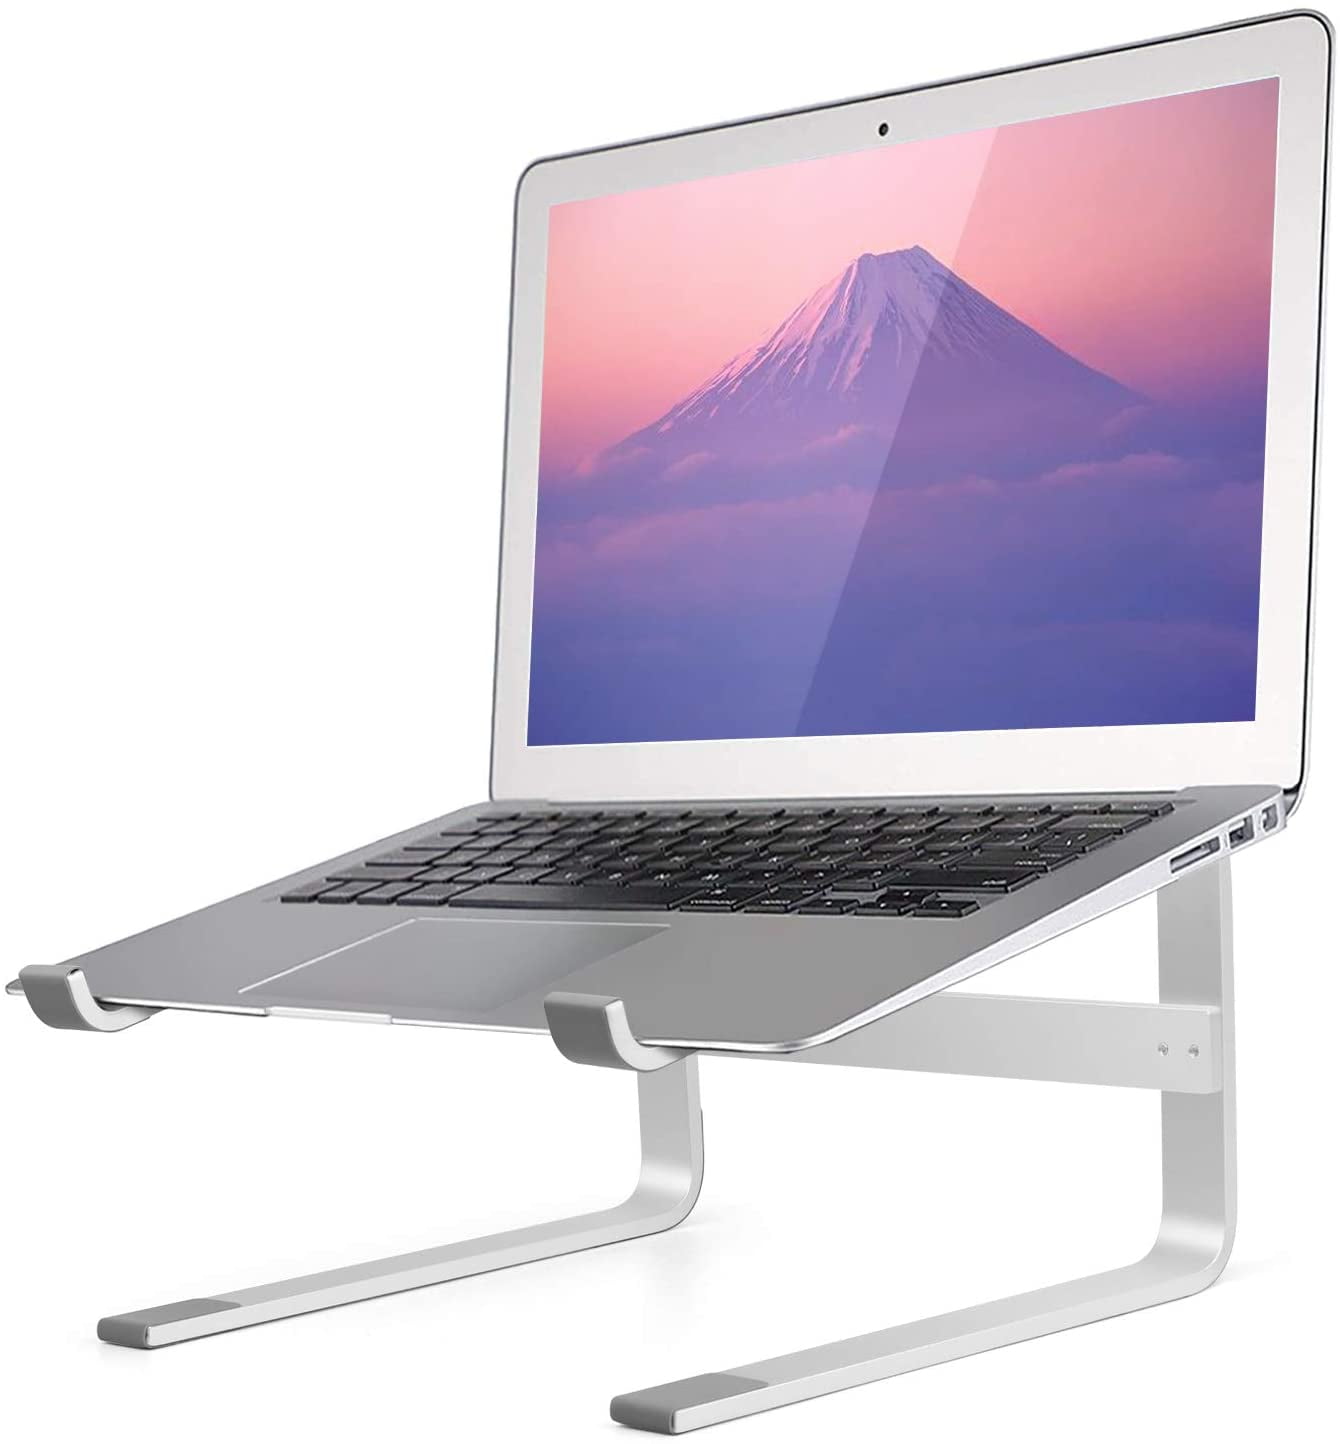 Portable Tablet Riser Universal Desk Stand Mobile Phone Bracket Cooling Pad